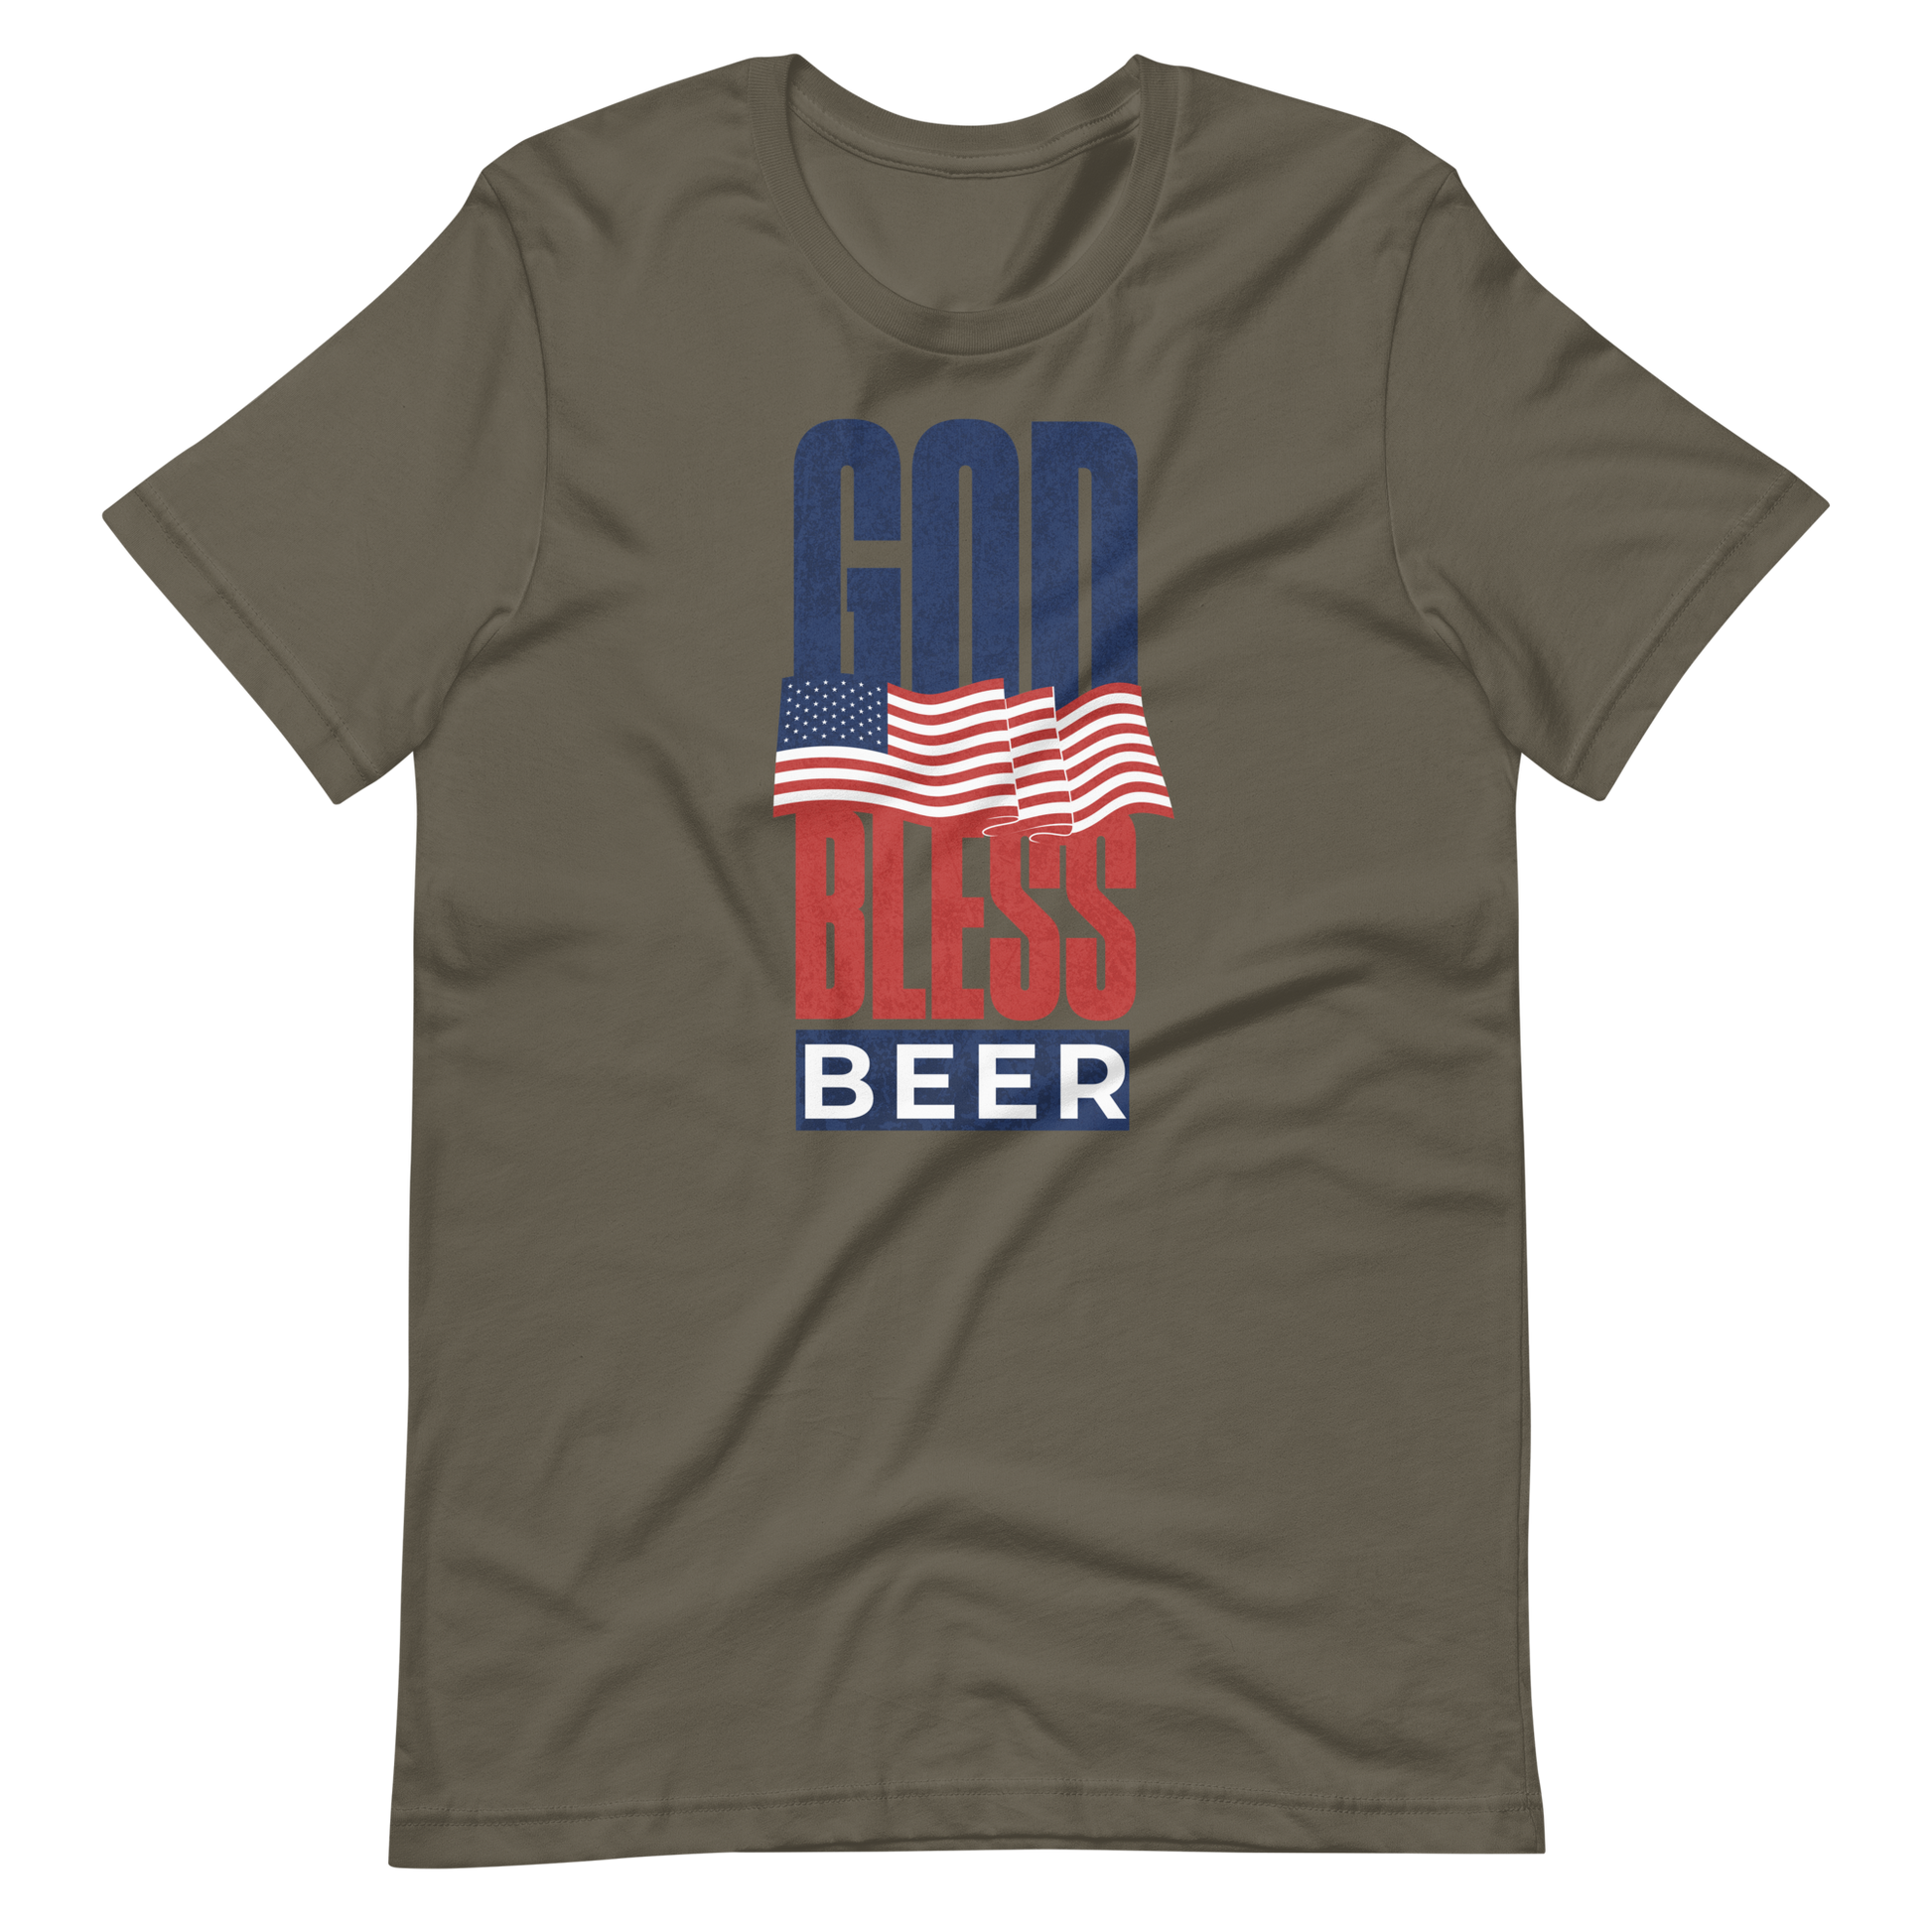 God Bless Beer T-shirt